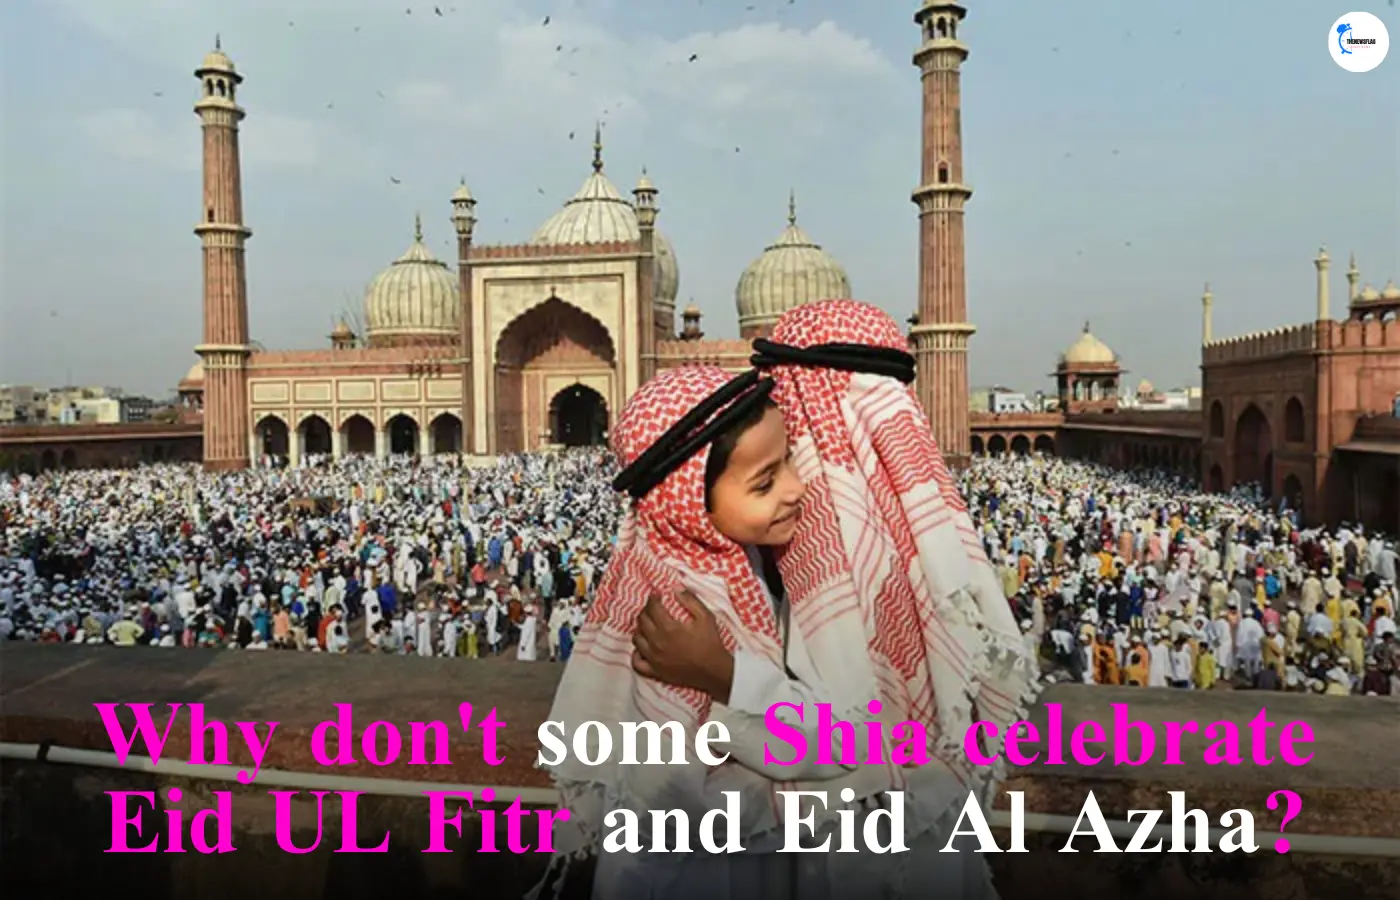 Why don't some Shia celebrate Eid UL Fitr and Eid Al Azha?